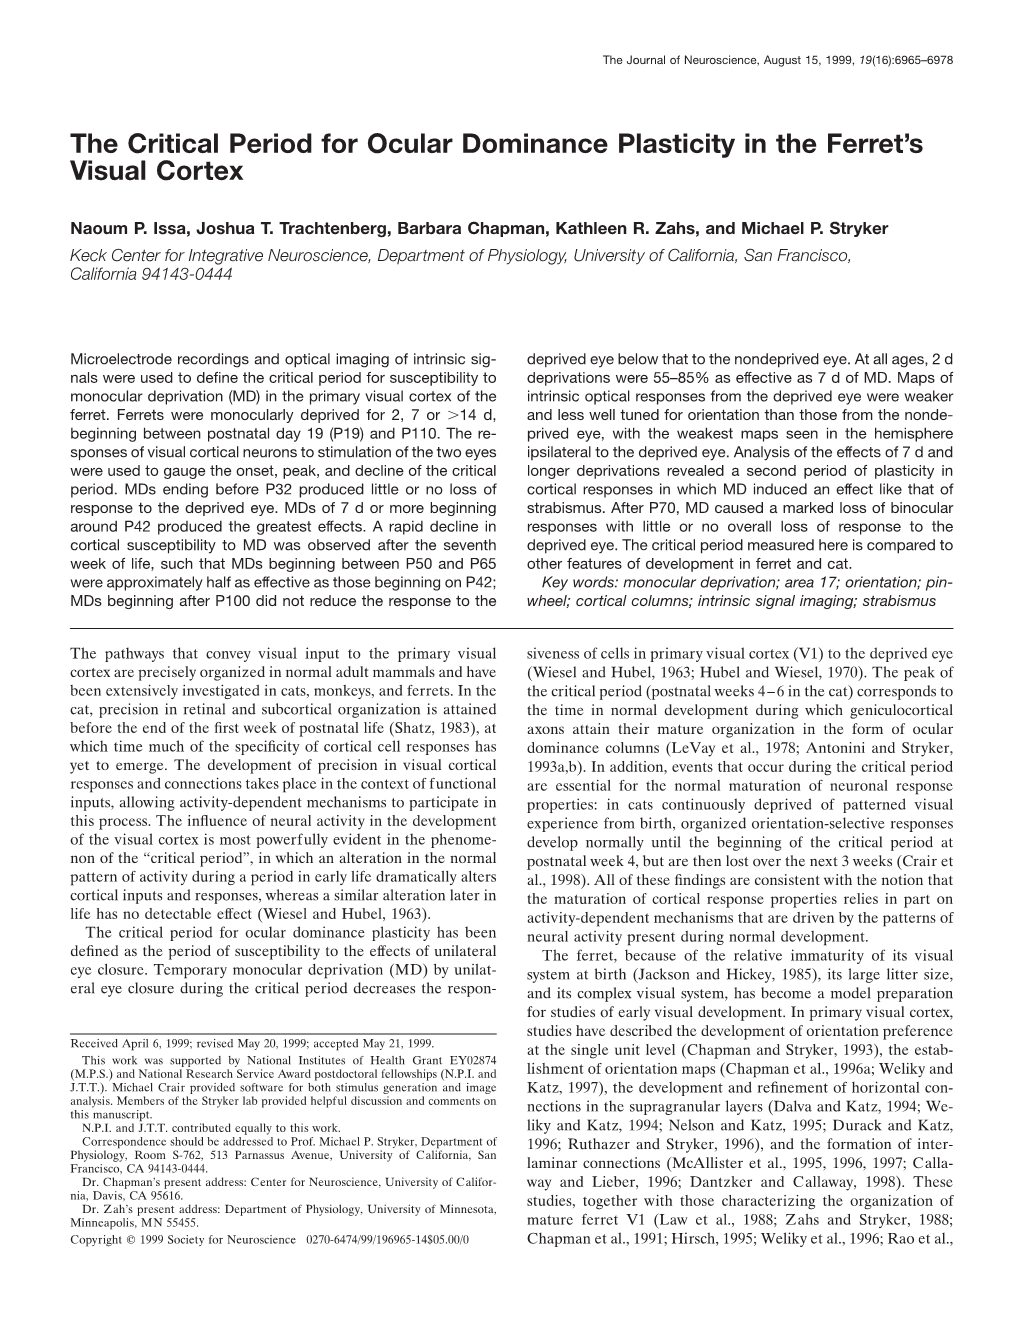 The Critical Period for Ocular Dominance Plasticity in the Ferret's Visual Cortex